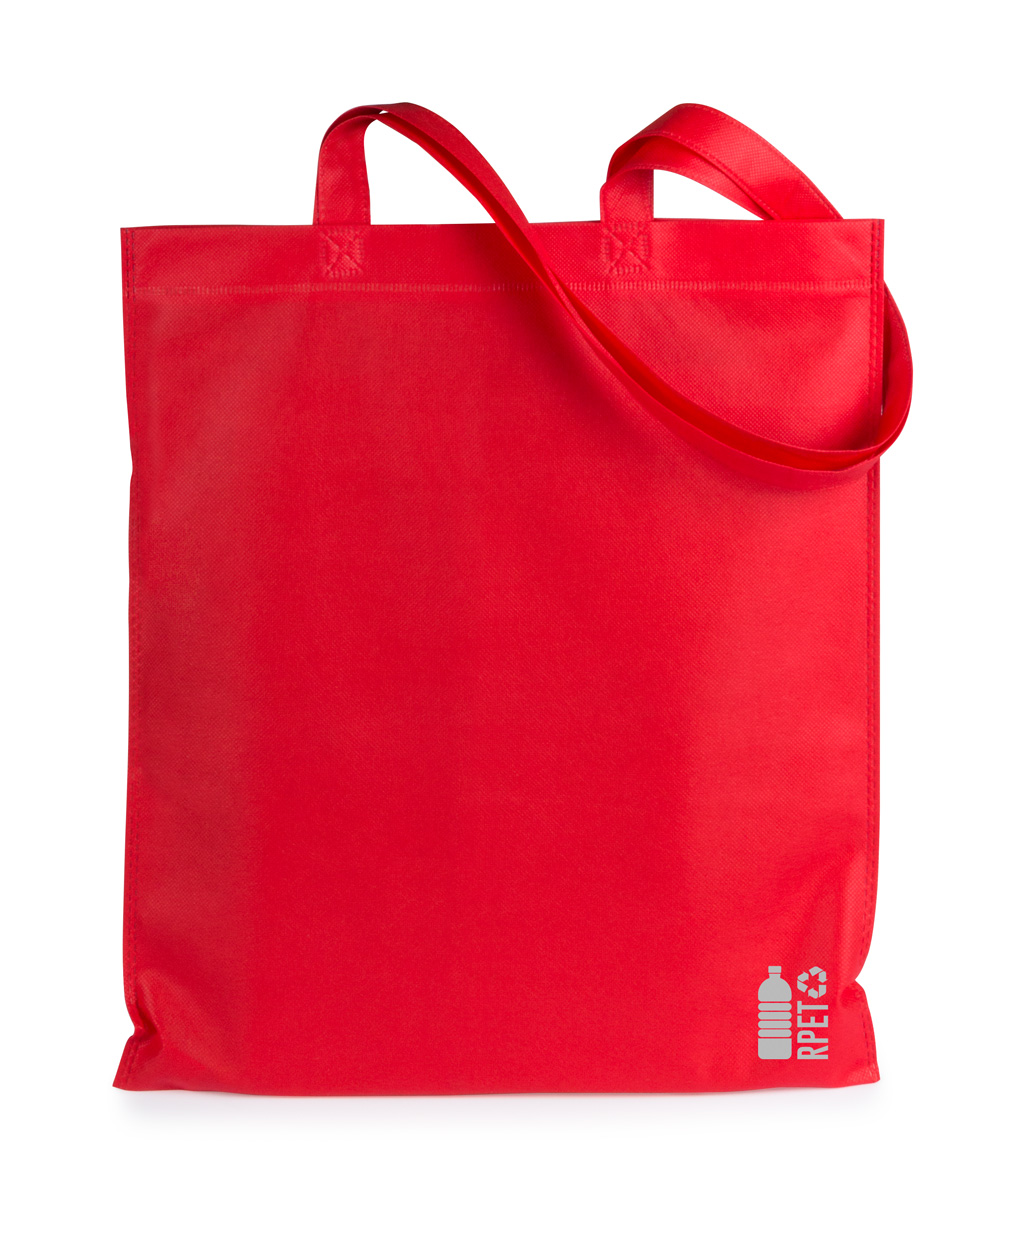 Rezzin RPET shopping bag - red